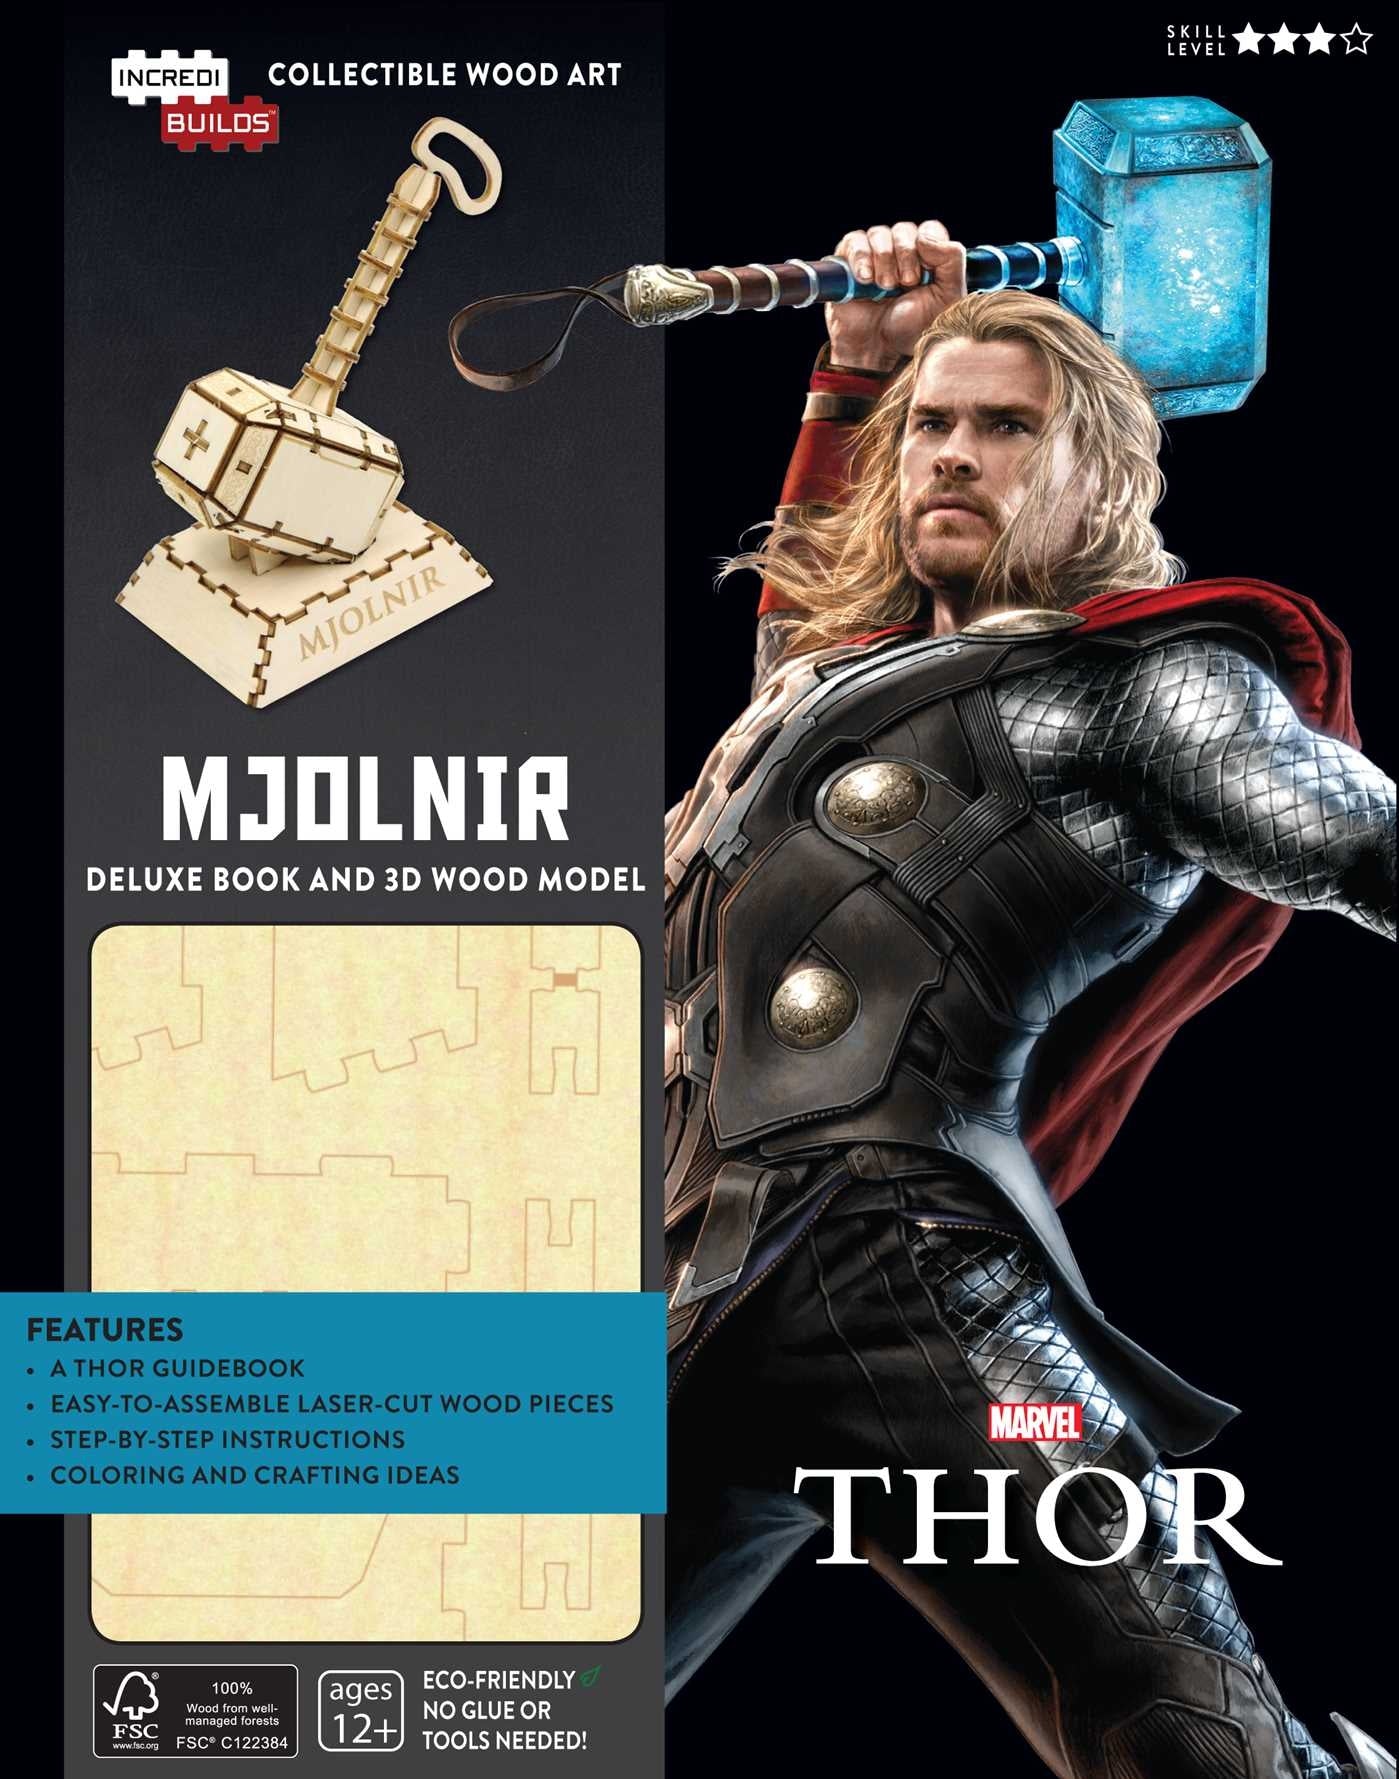 Thor Hammer - Incredibuilds 3D Wood Model and Booklet